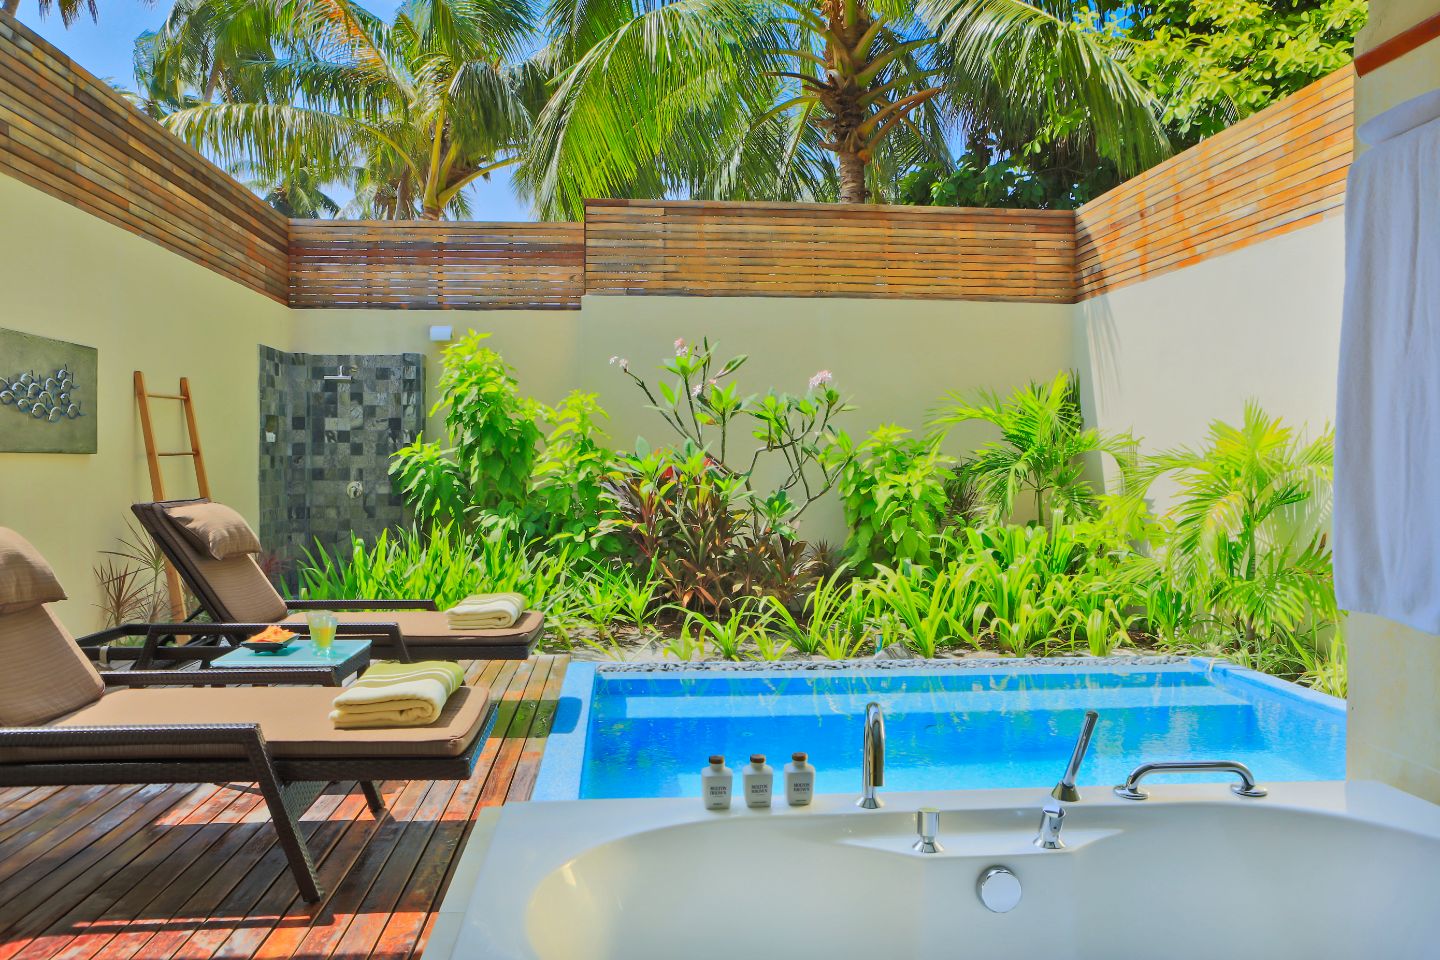 The private pool patio area of the Garden Pool Villa at Kurumba Maldives.